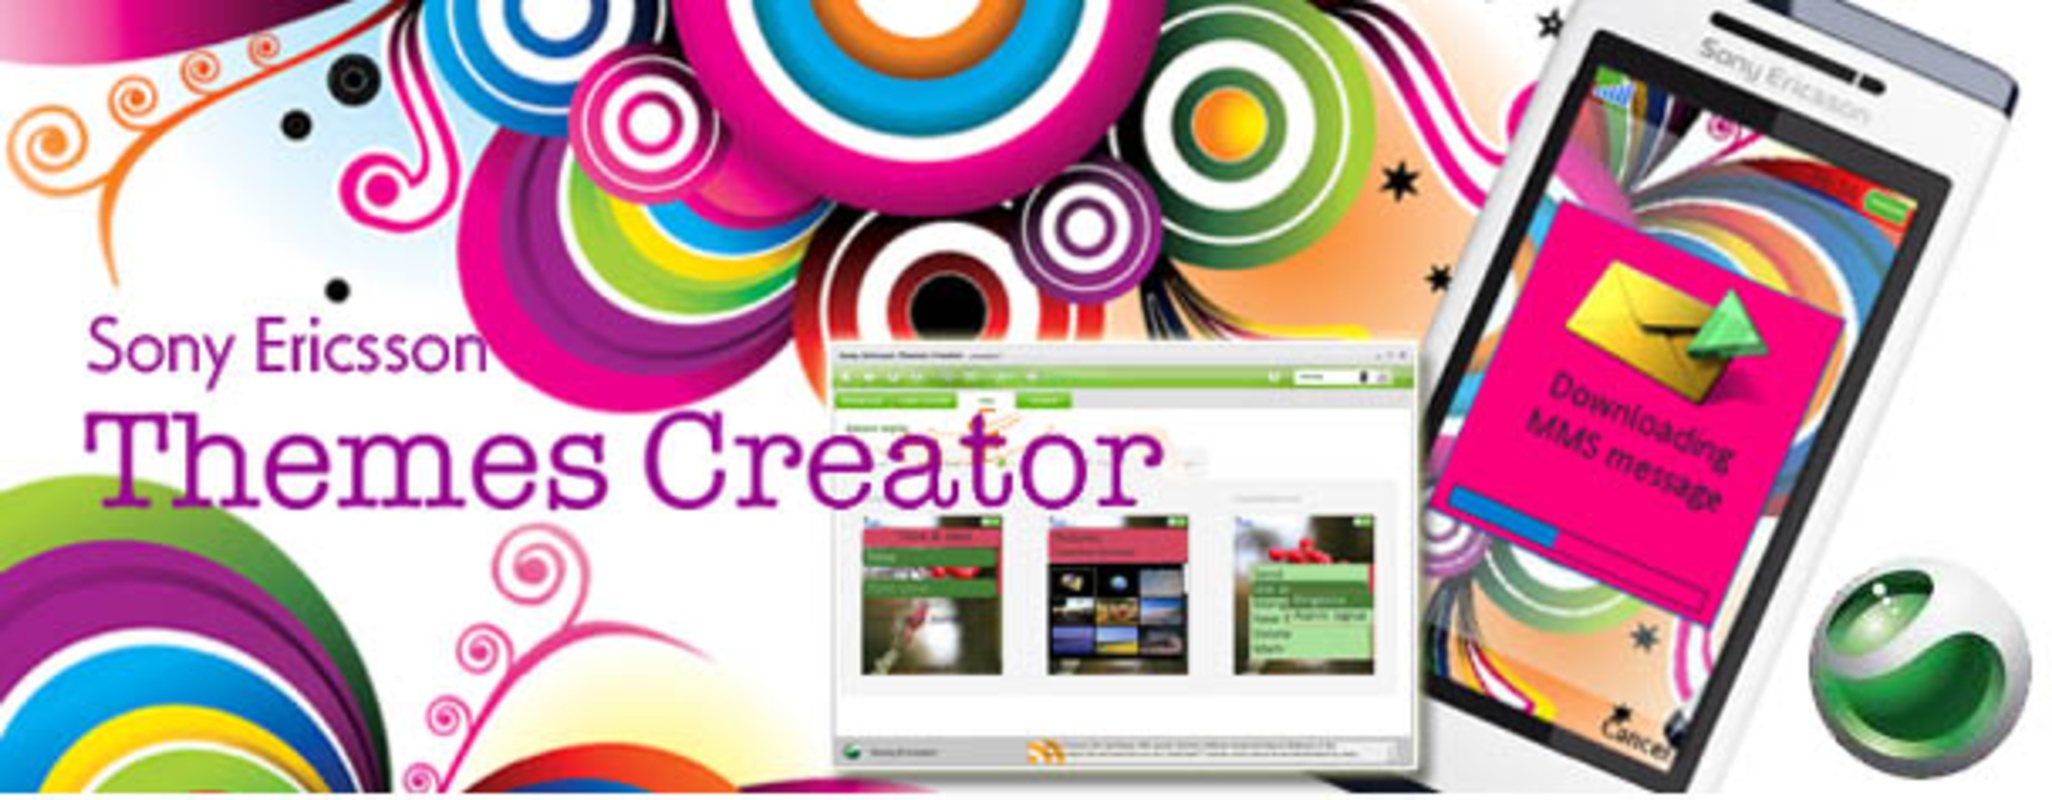 Sony Ericsson Themes Creator 4.16 for Mac Screenshot 1